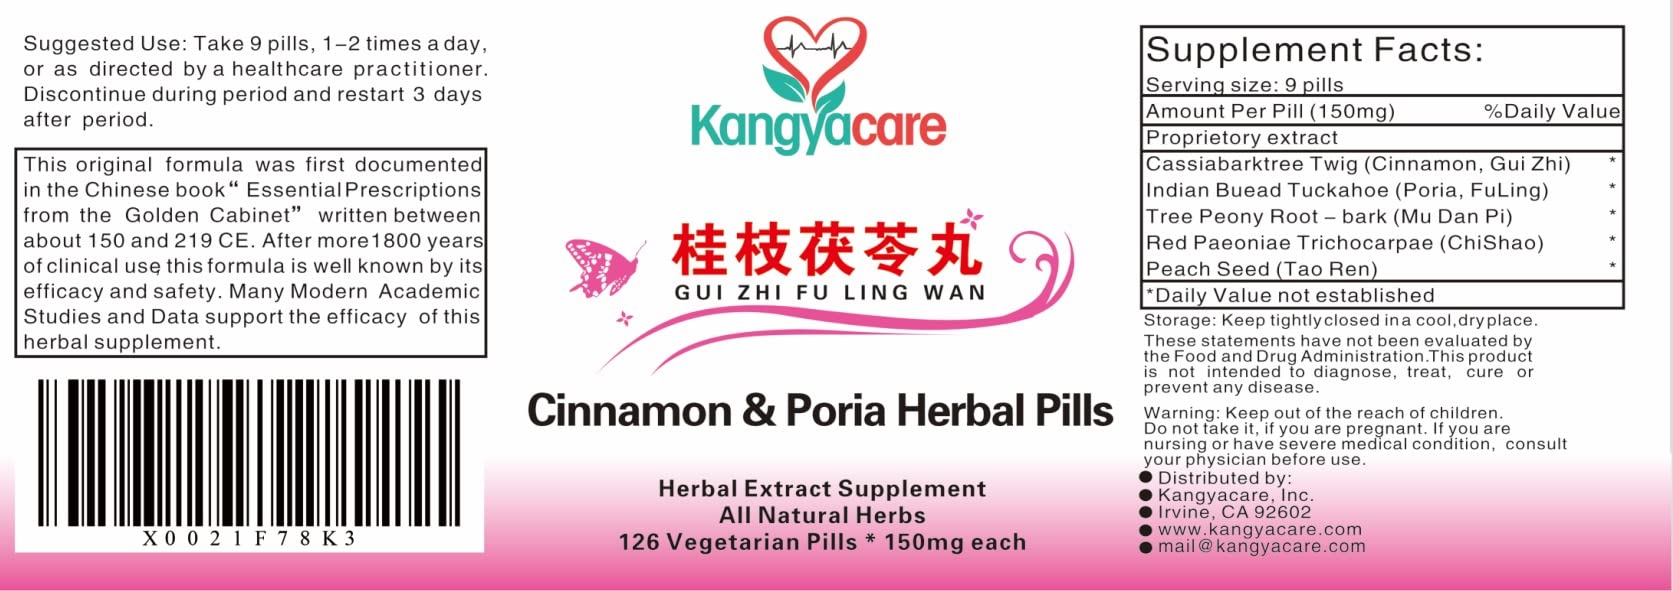 Kangyacare] GUI Zhi Fu Ling Wan -Cinnamon & Poria Pills -Natural Cycle Relief -Help Menstrual Cramps, Pelvic Cramping, Bloating, Period Pain -Promote Women's Health-100% Natural - 252 Ct (2 Bottles)